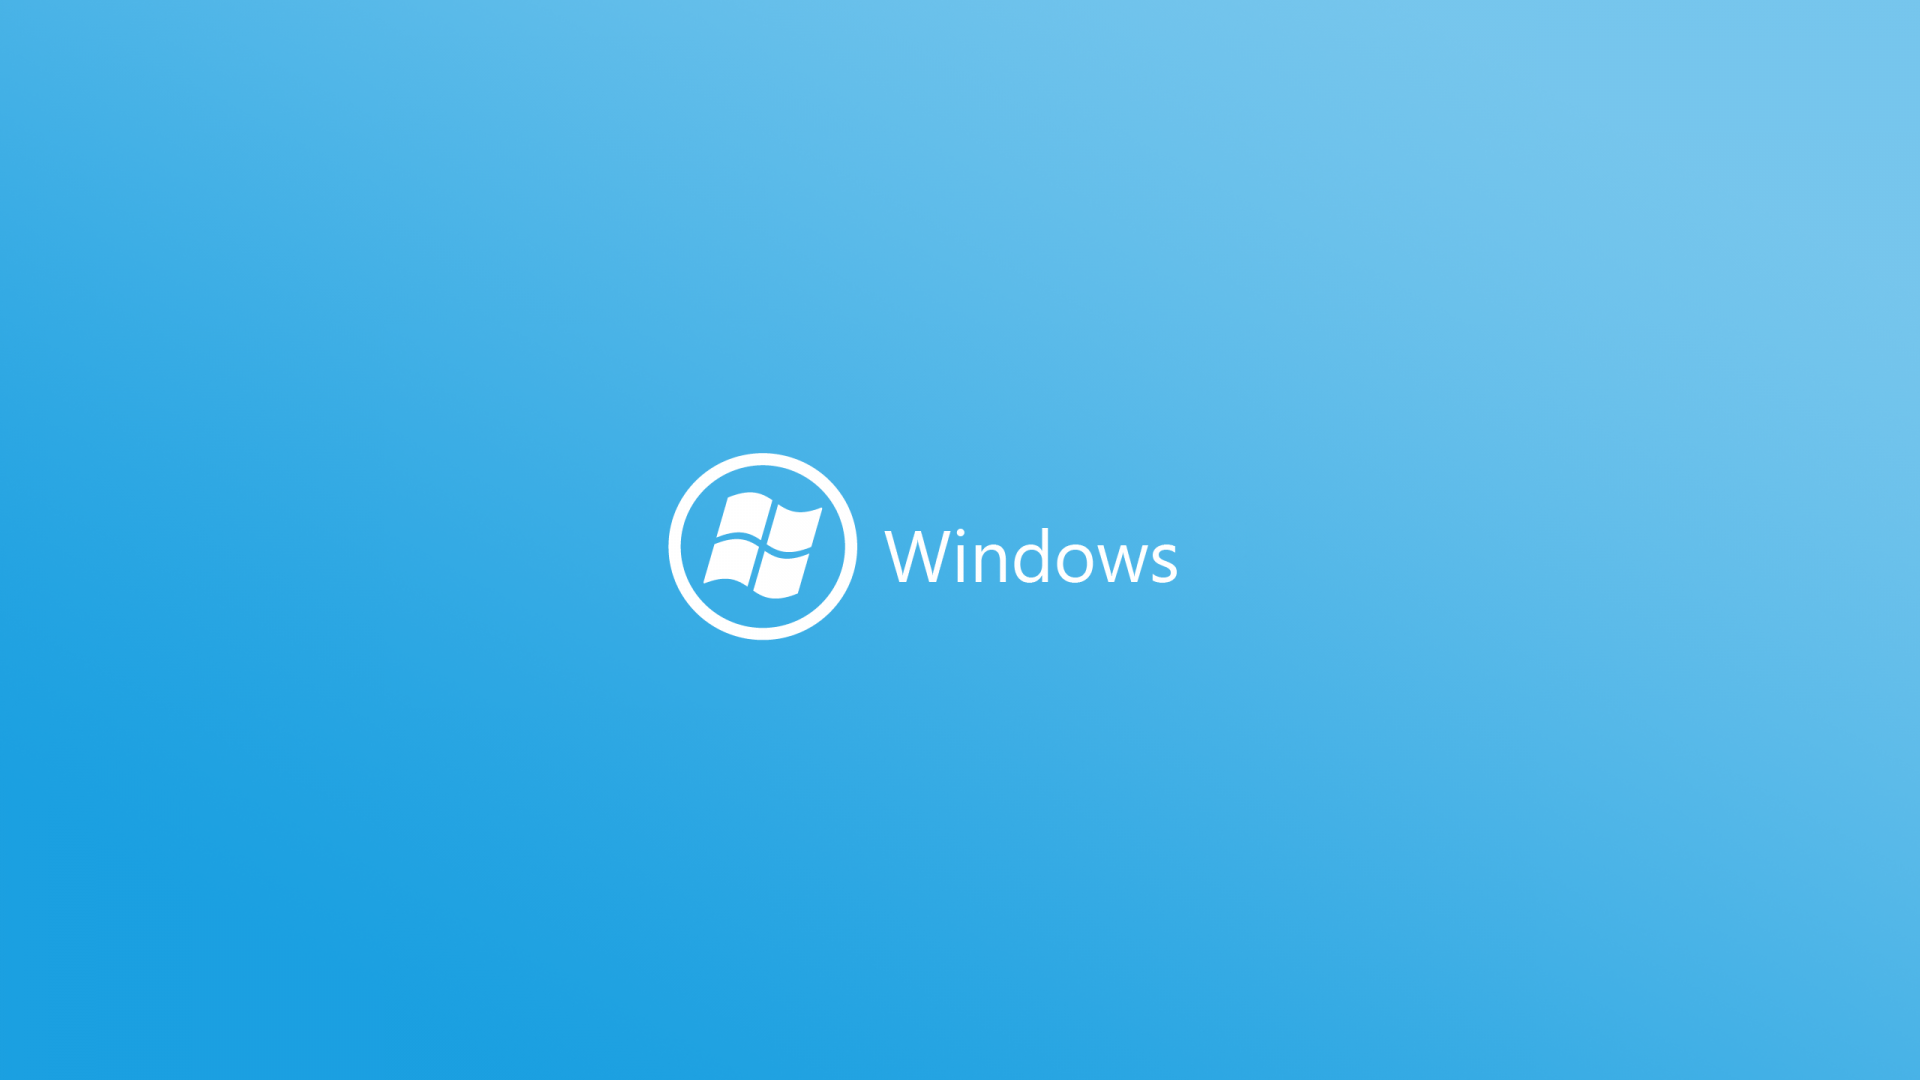 Desktop Wallpaper Windows Logo In Blue Background Hd Image Picture Background Ha4bgf